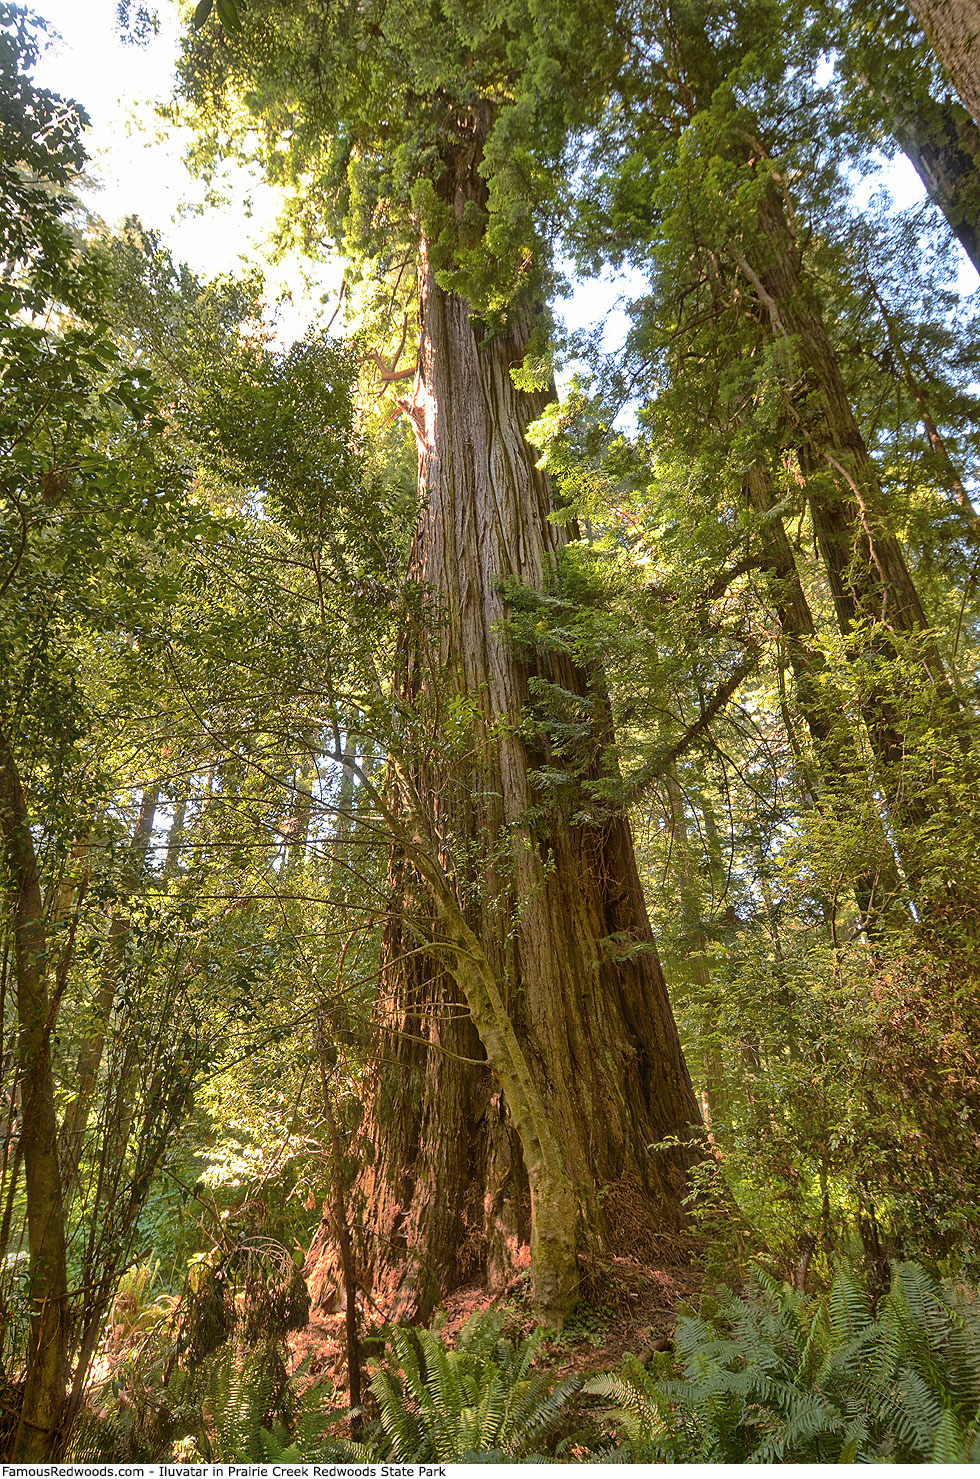 Prairie Creek Redwoods State Park - Iluvatar Tree